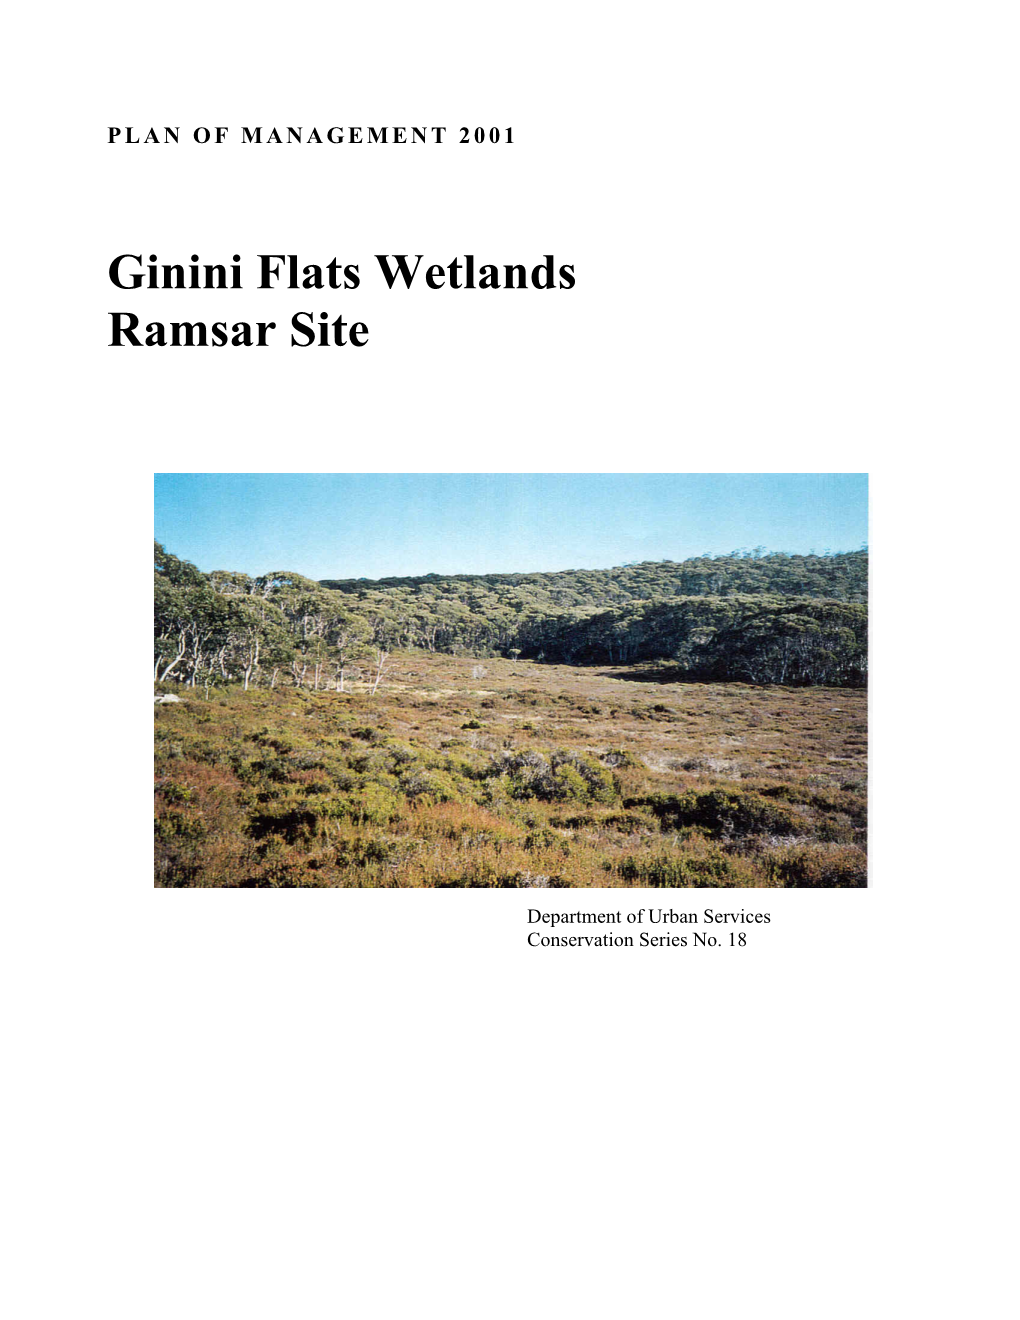 Ginini Flats Wetlands Ramsar Site